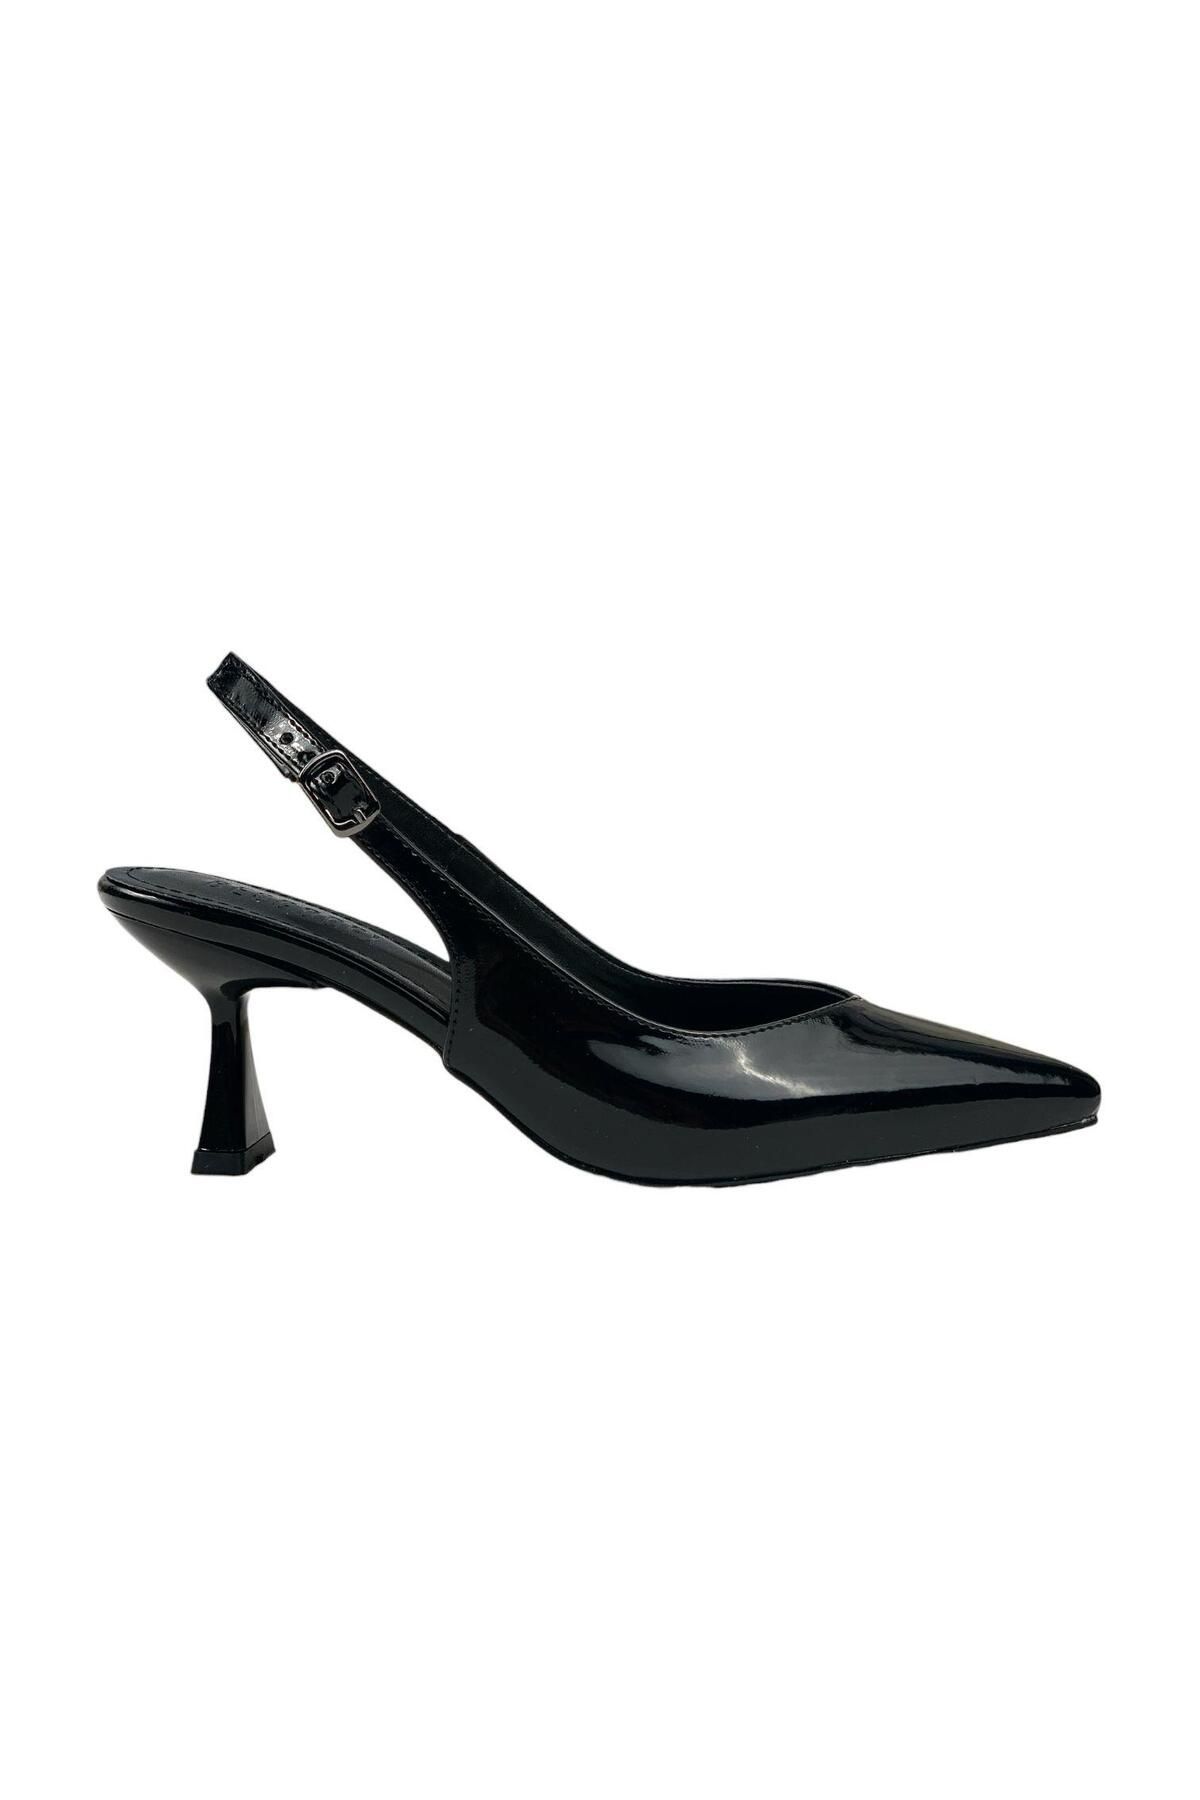 bescobel Kadın Pasge Siyah Rugan Sivri Burun Topuklu Sandalet 6 Cm 4114